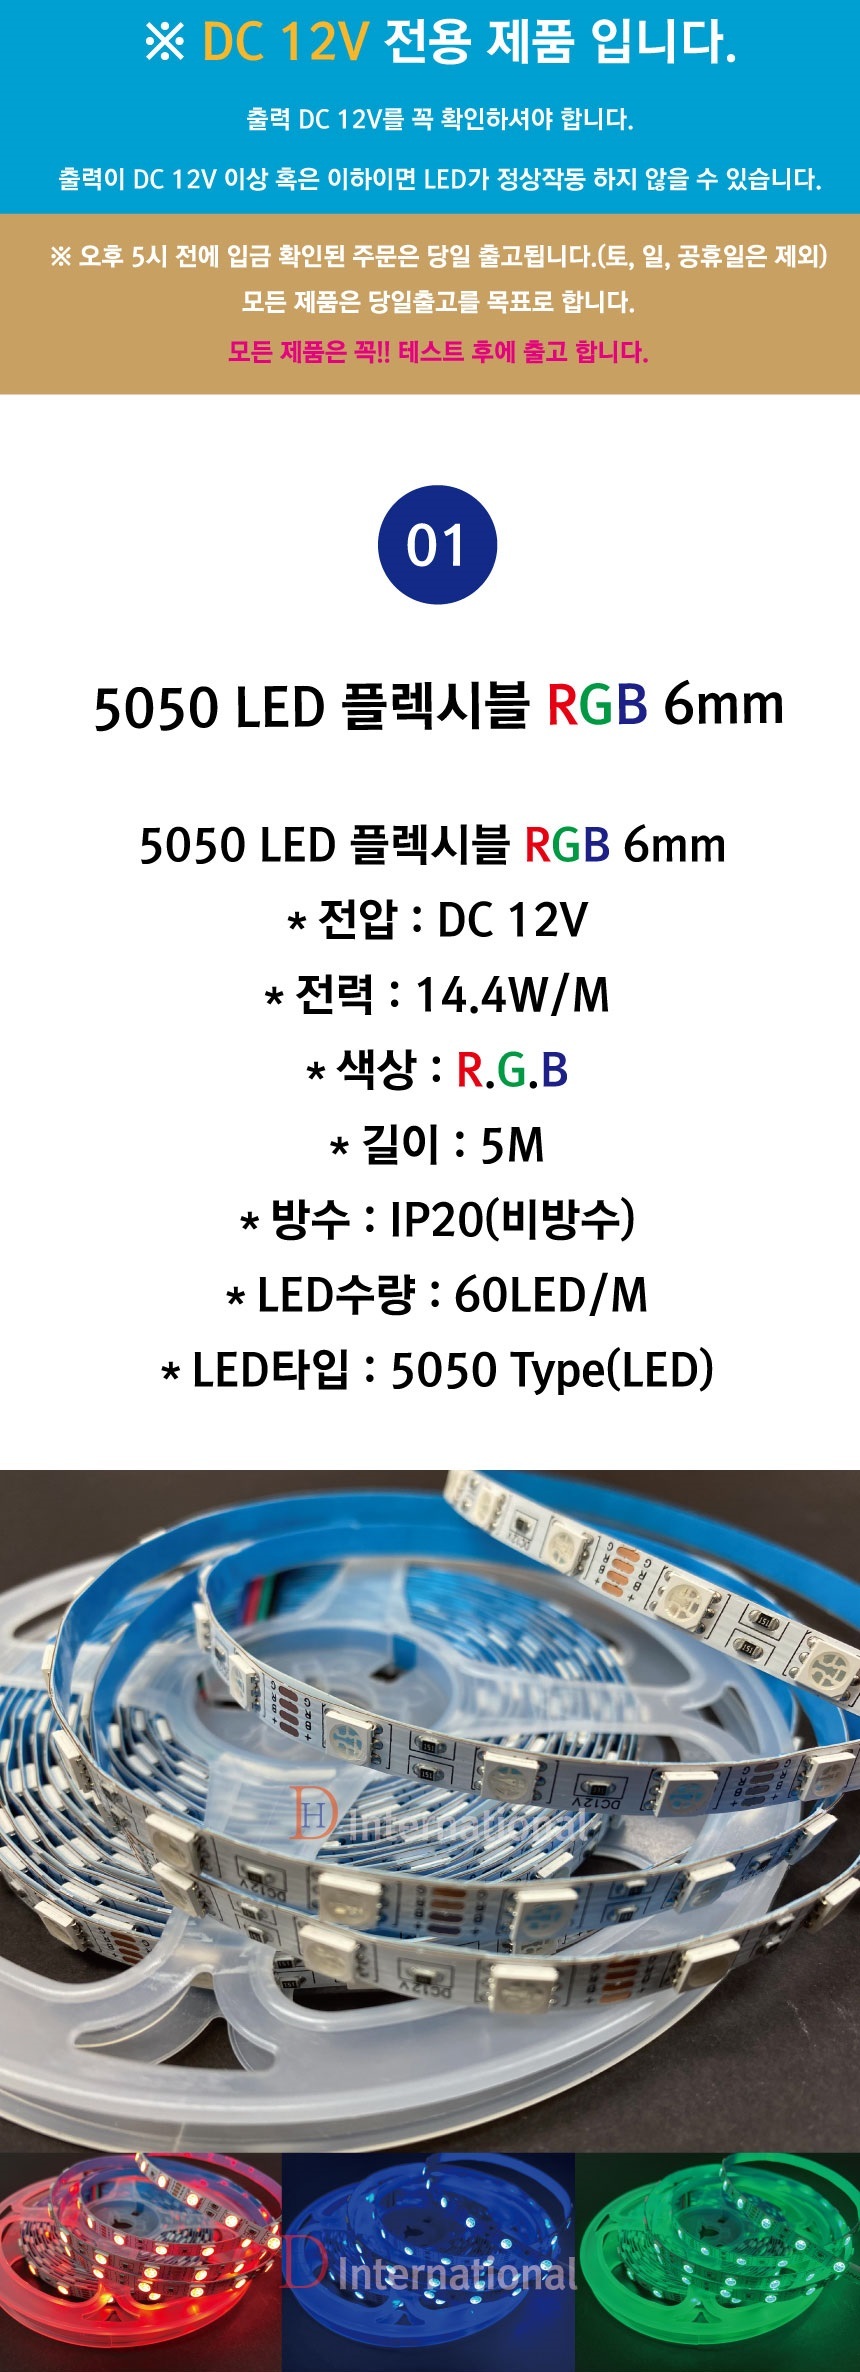 DC12V-6mm-RGB-STRIP-%EC%83%81%ED%92%88%E